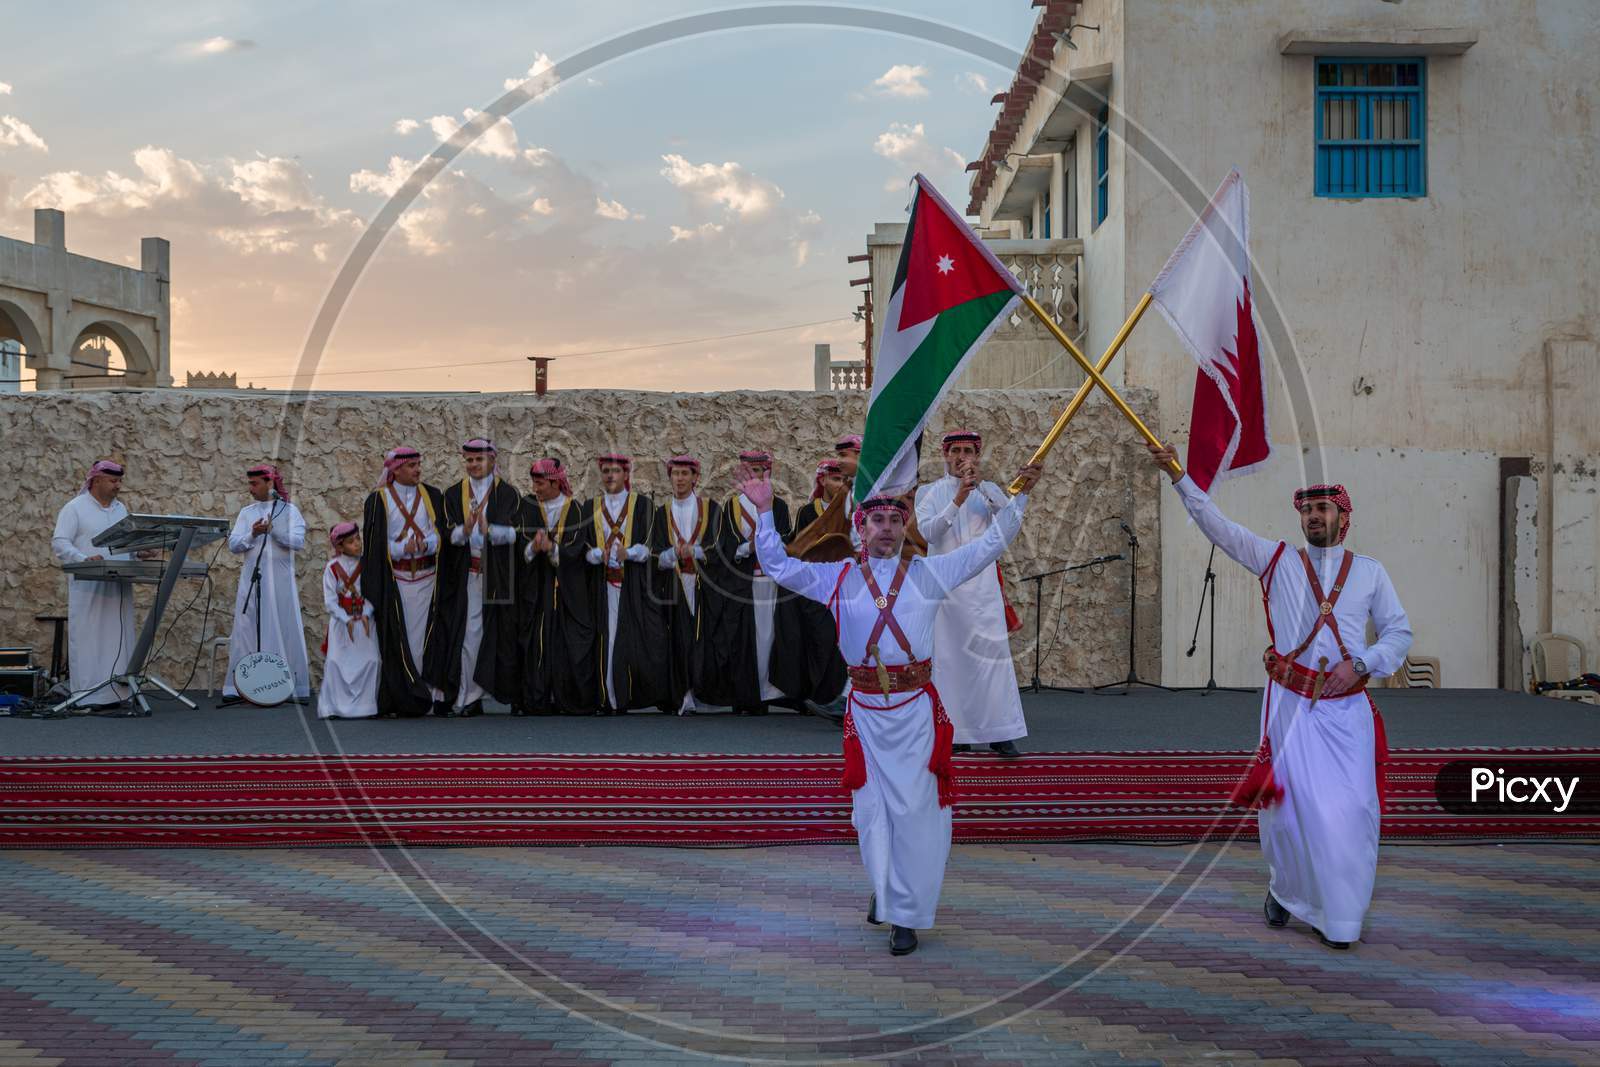 Traditional Arabic folklore dance  from Jordan in Souk Waqif spring festival, Doha Qatar